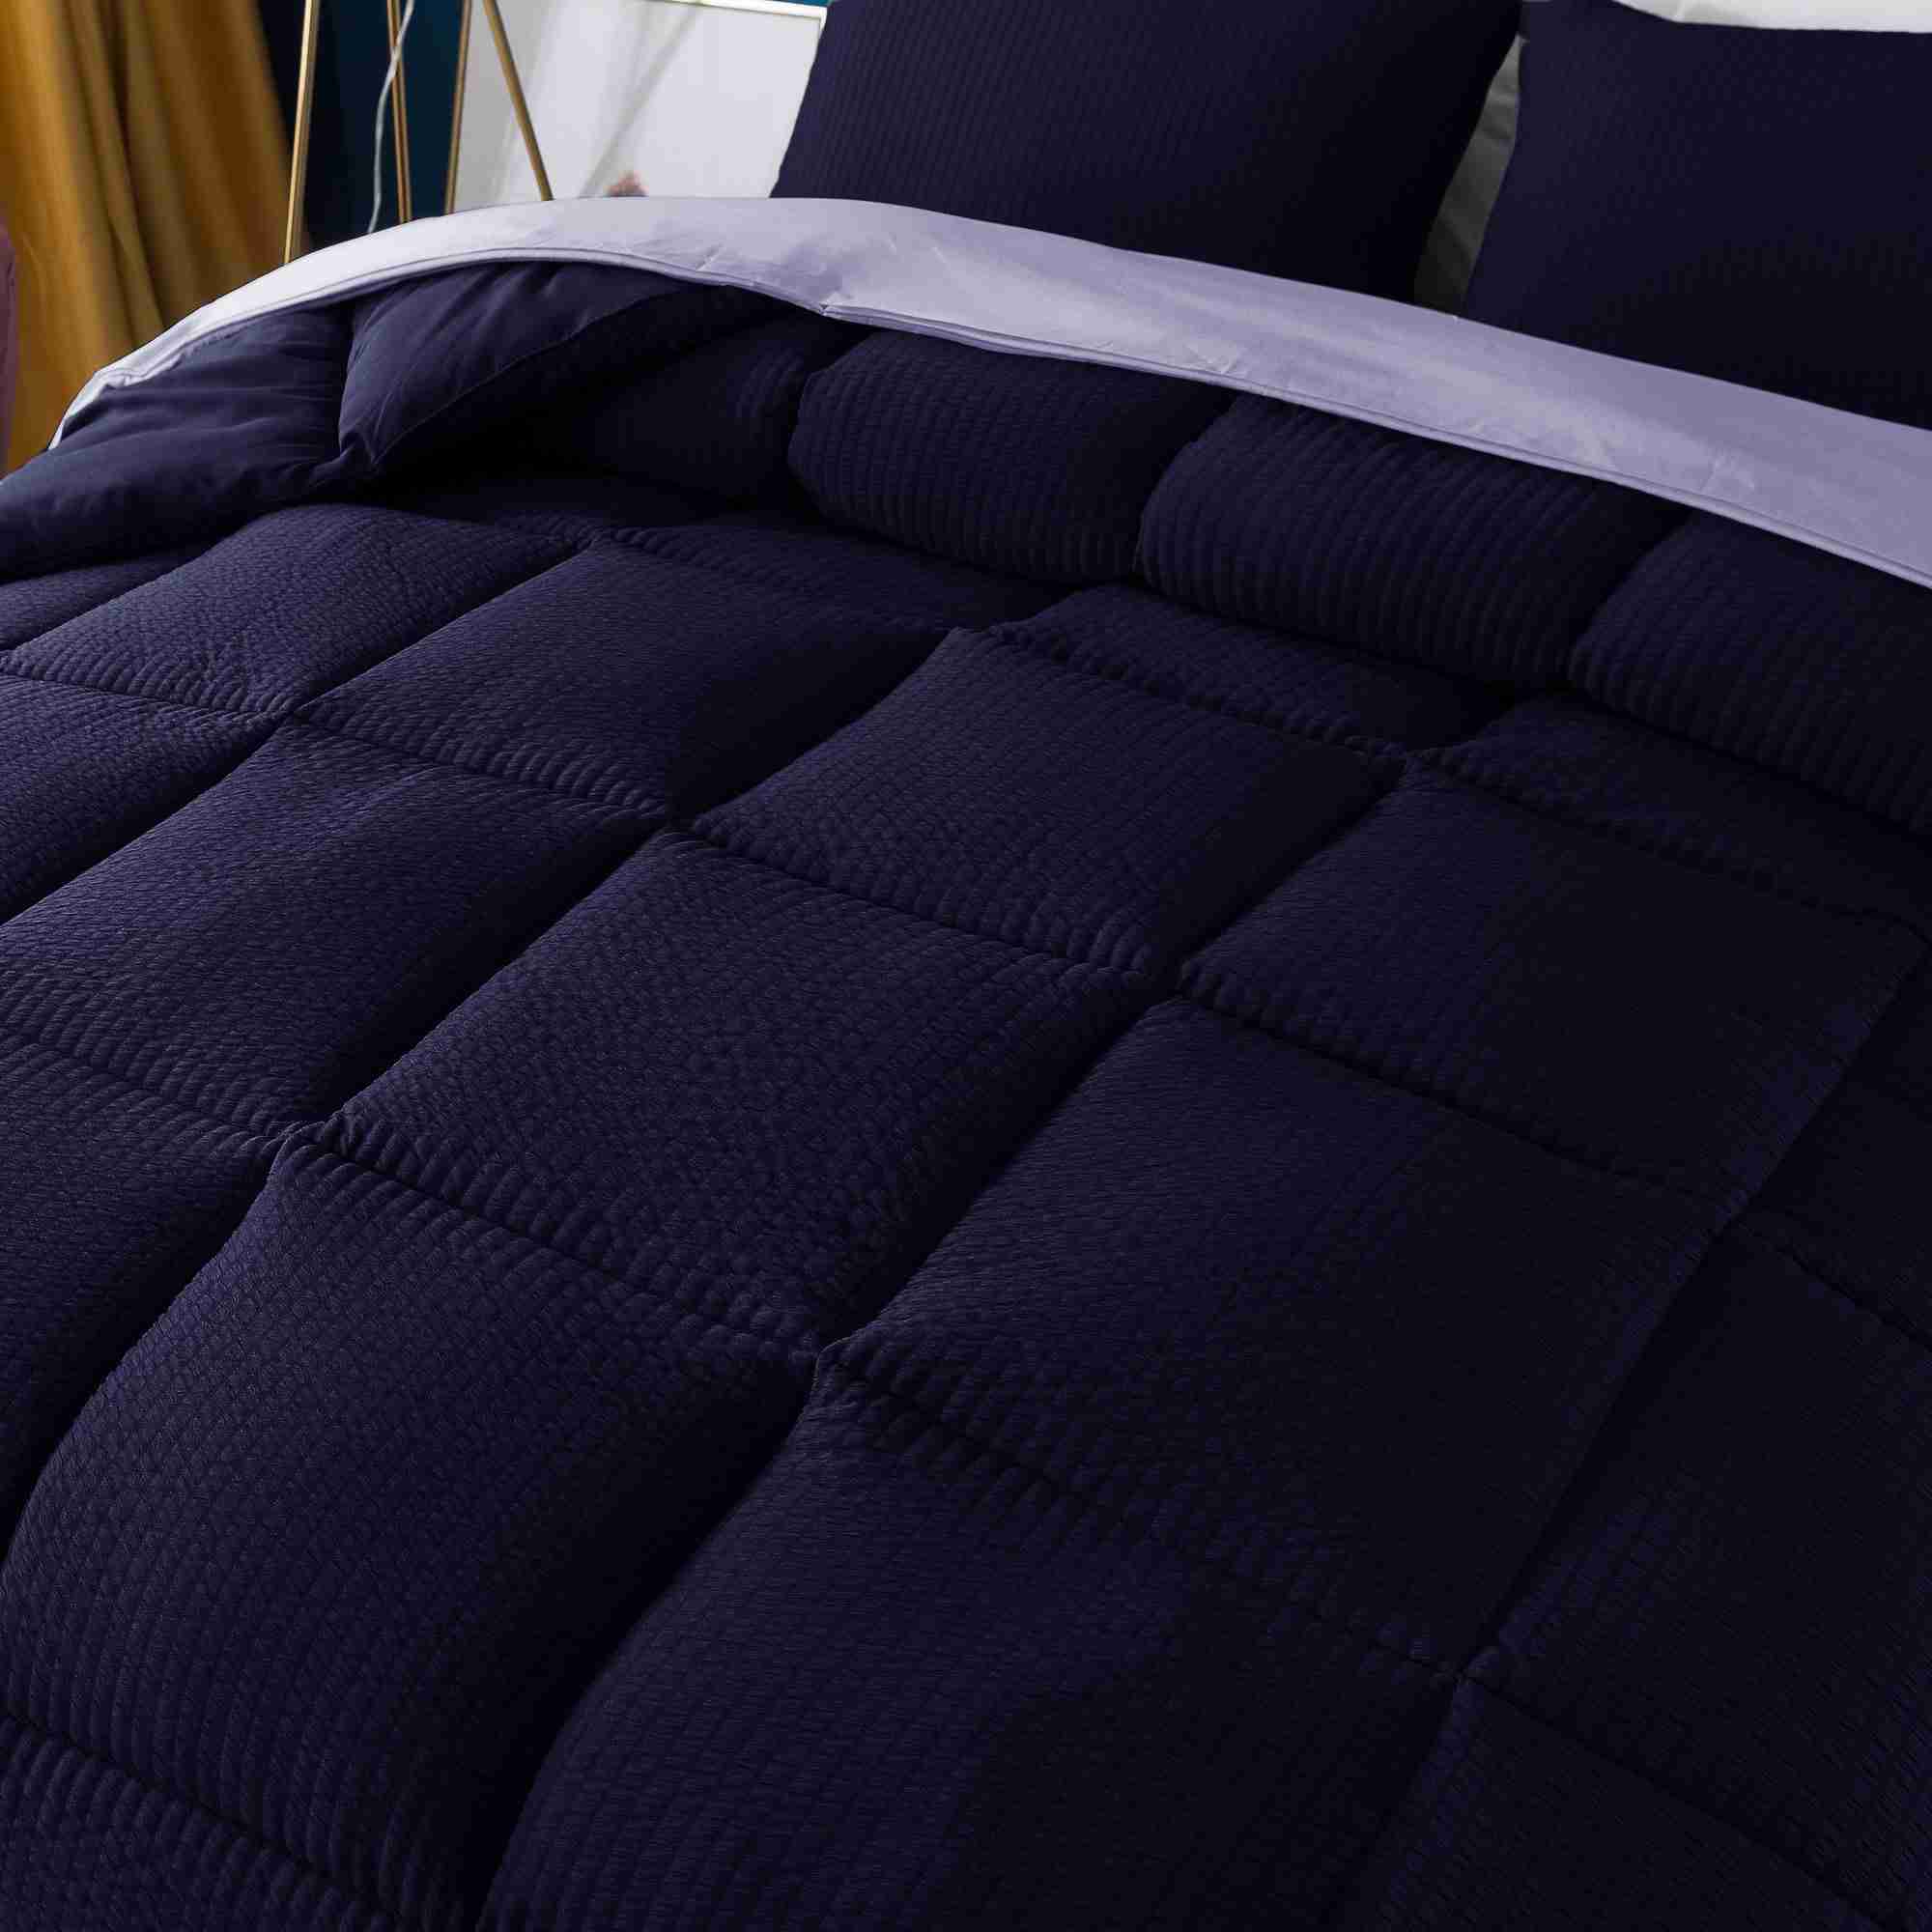 all-season-seersucker-comforter-set-king-size-cozy-soft for cheap